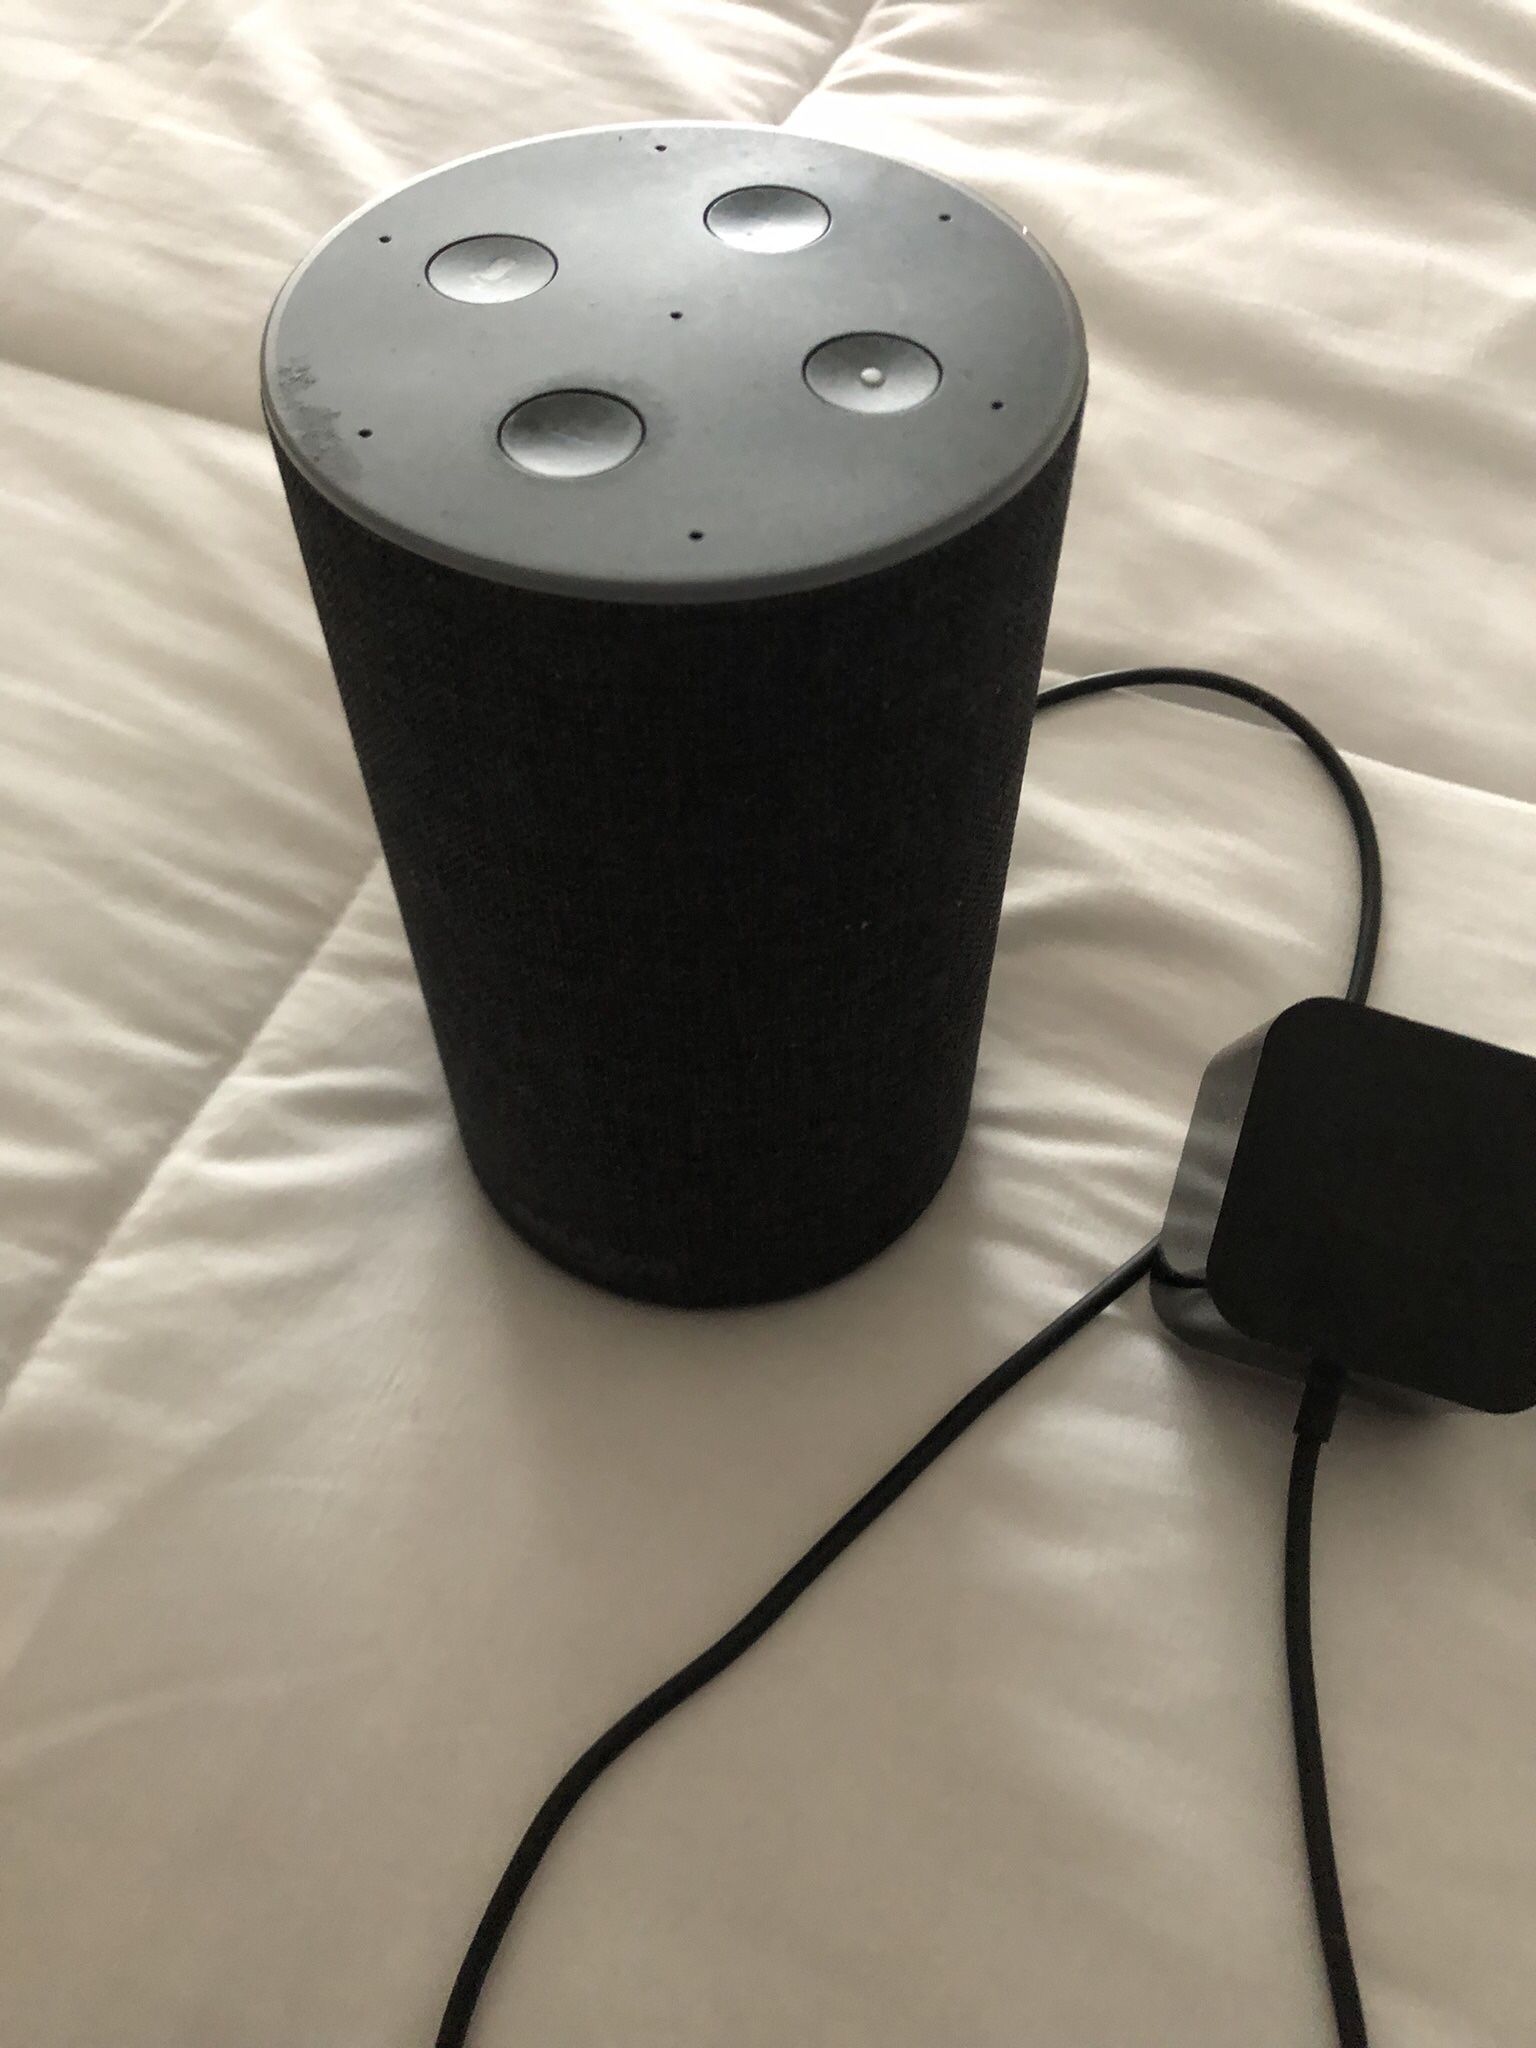 Amazon Echo 2nd Generation Speaker